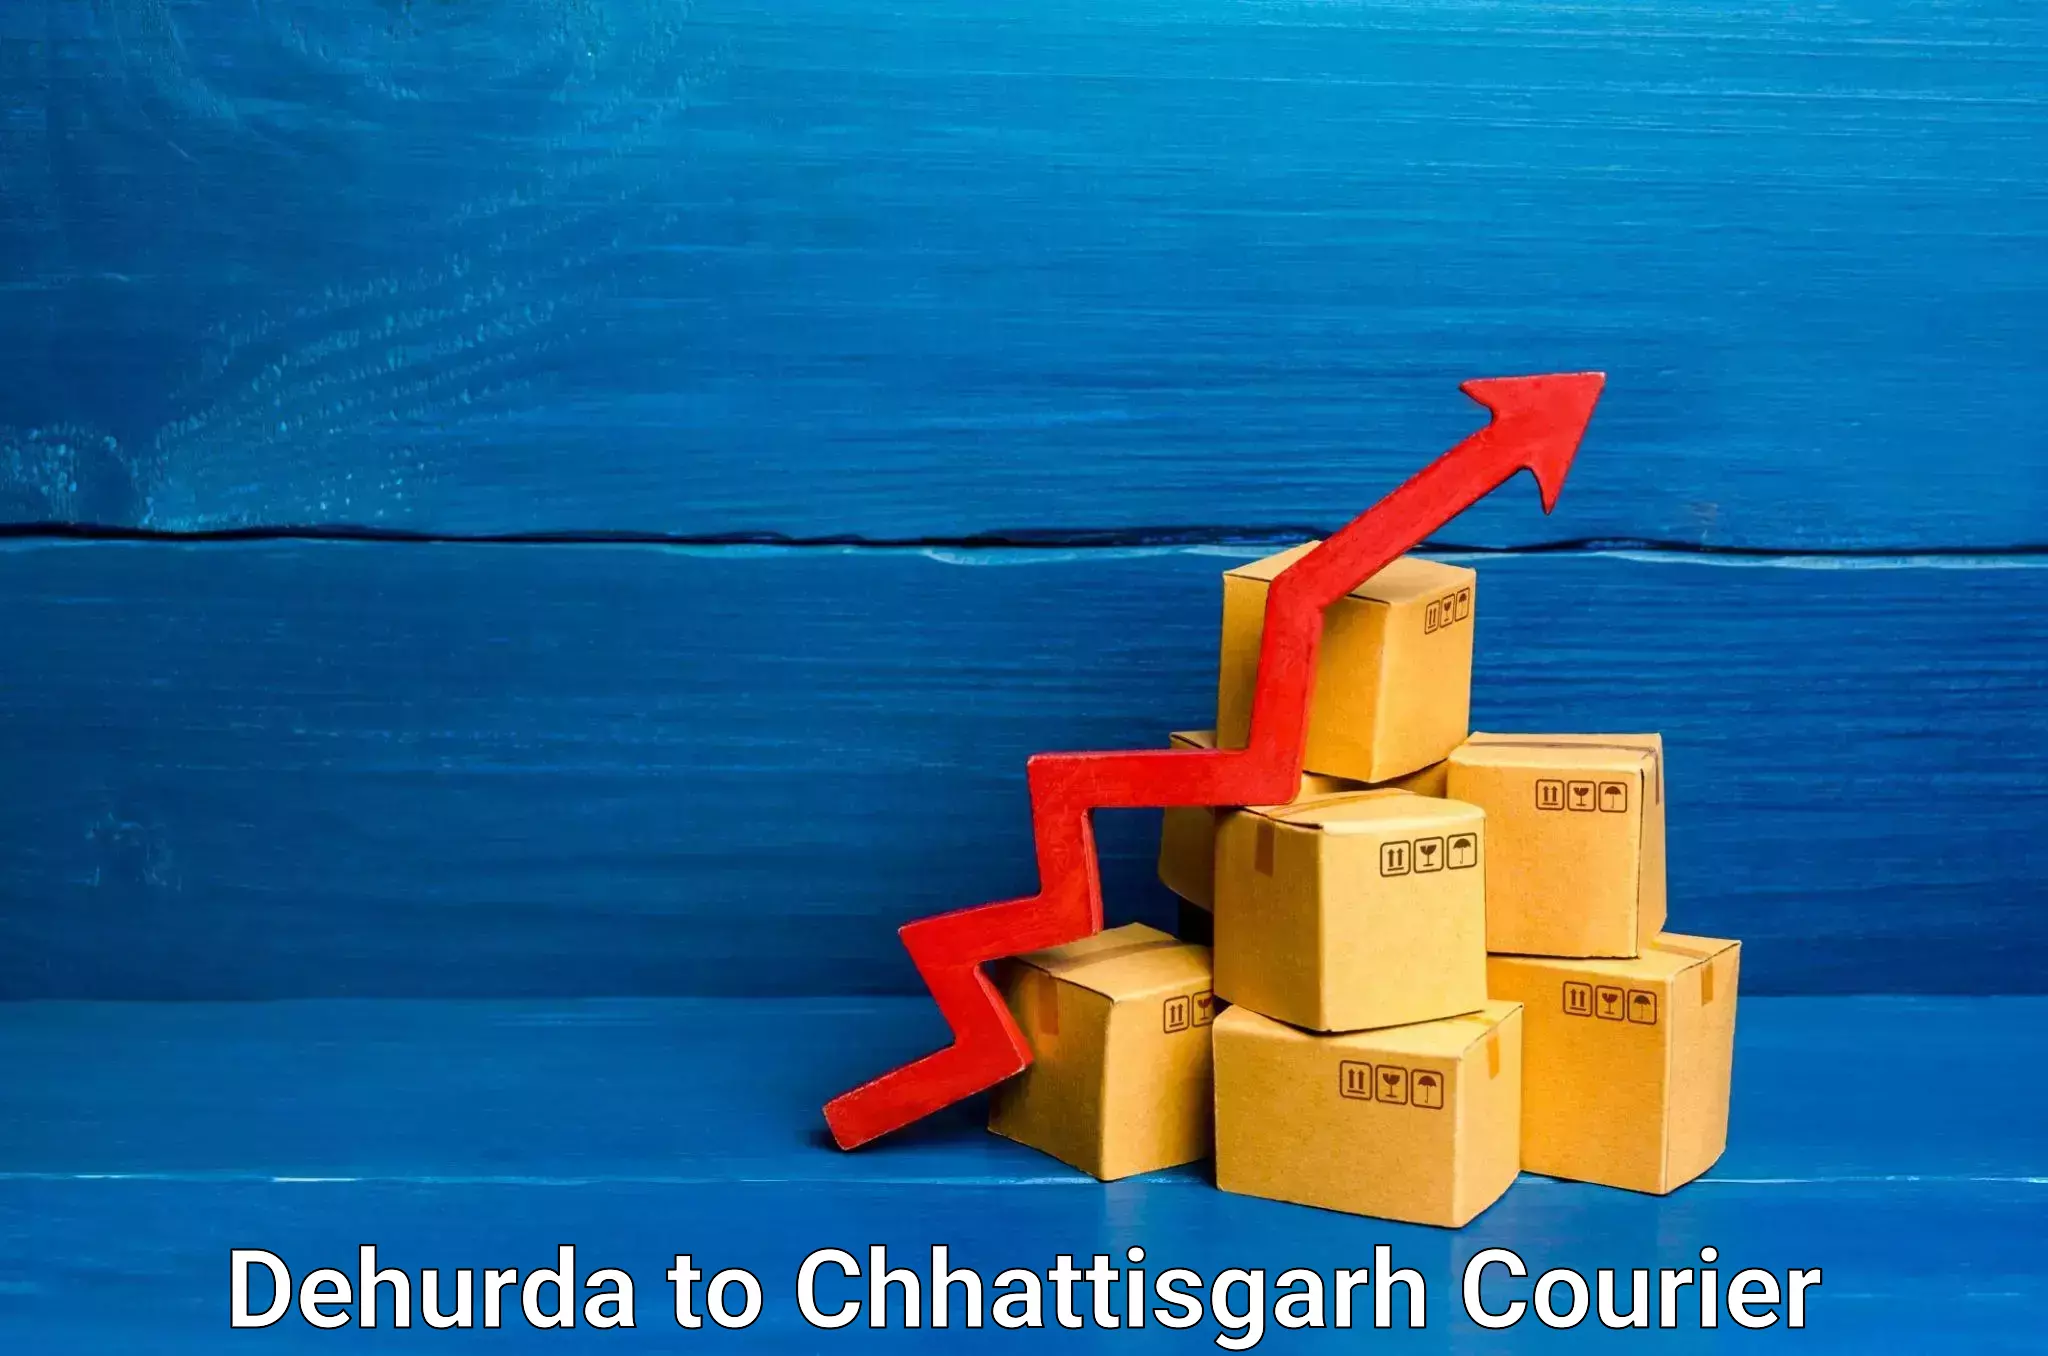 Specialized shipment handling in Dehurda to Pratappur